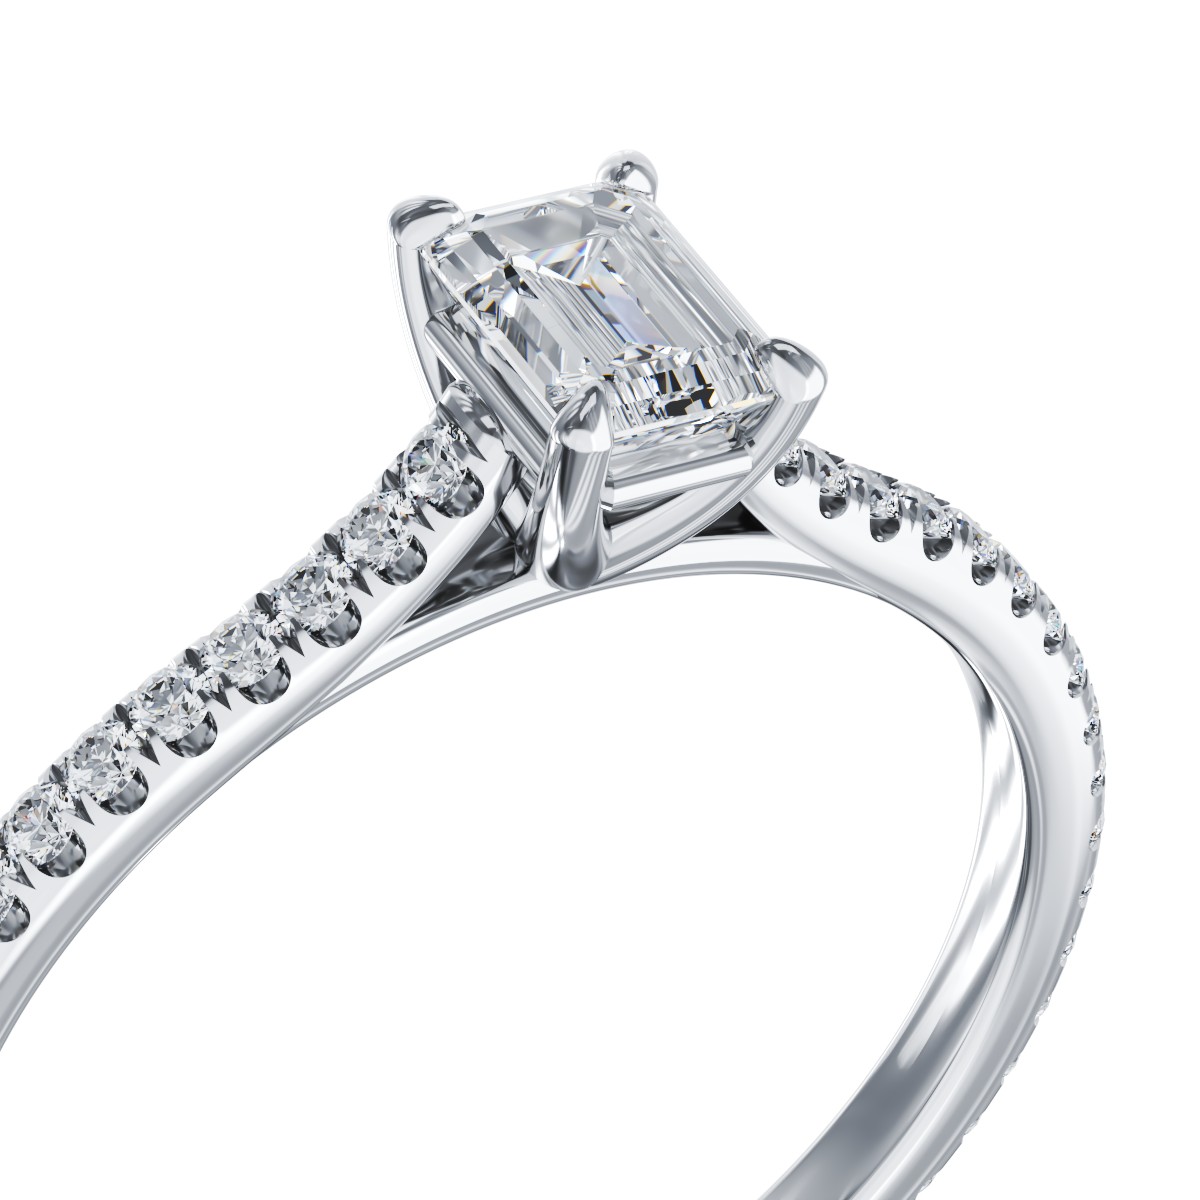 Platinum engagement ring with 0.31ct diamond and 0.19ct diamonds